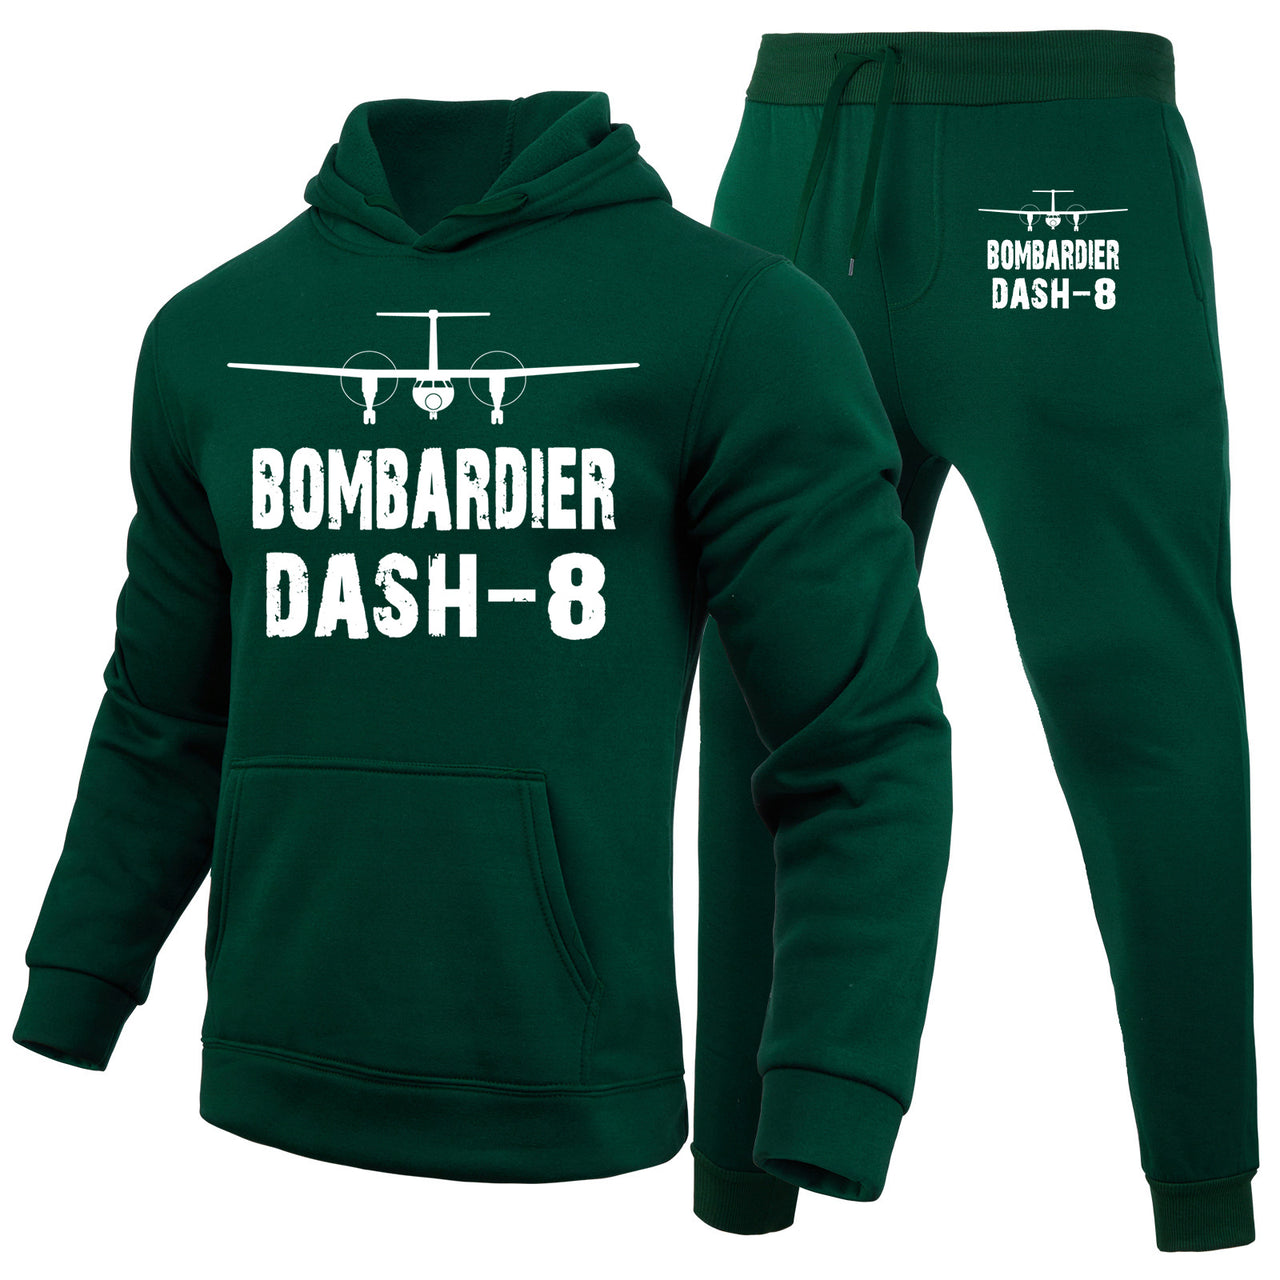 Bombardier Dash-8 & Plane Designed Hoodies & Sweatpants Set